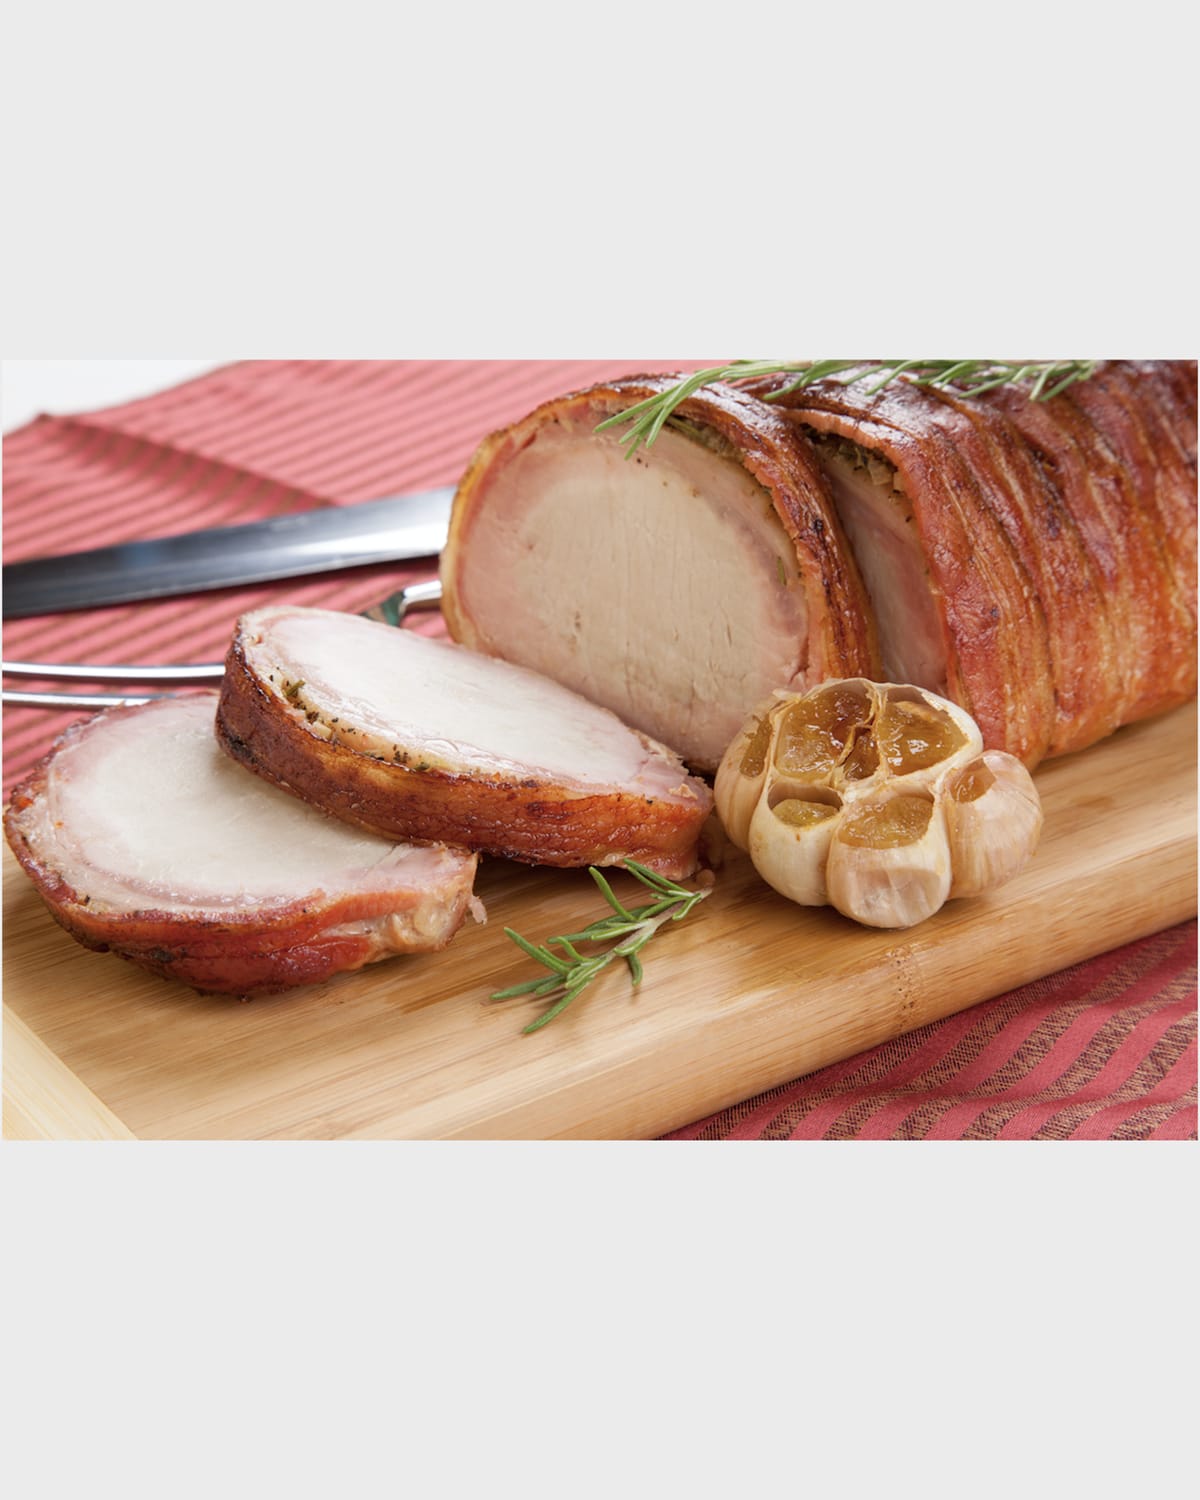 2.5 lbs. Smoked Bacon-Wrapped Pork Loin, Serves 4-6